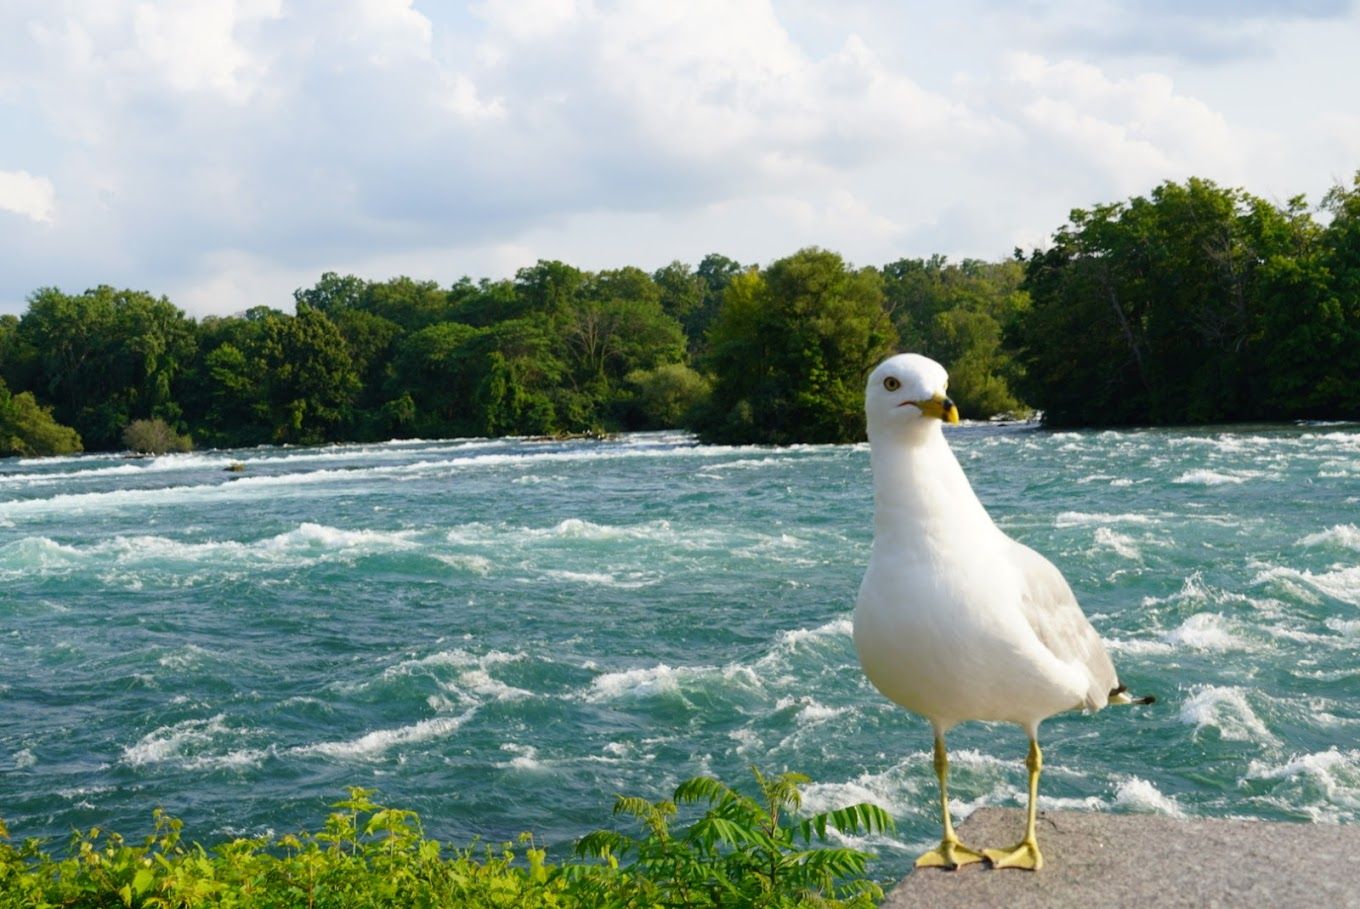 Top 10 photo spots in Niagara Falls